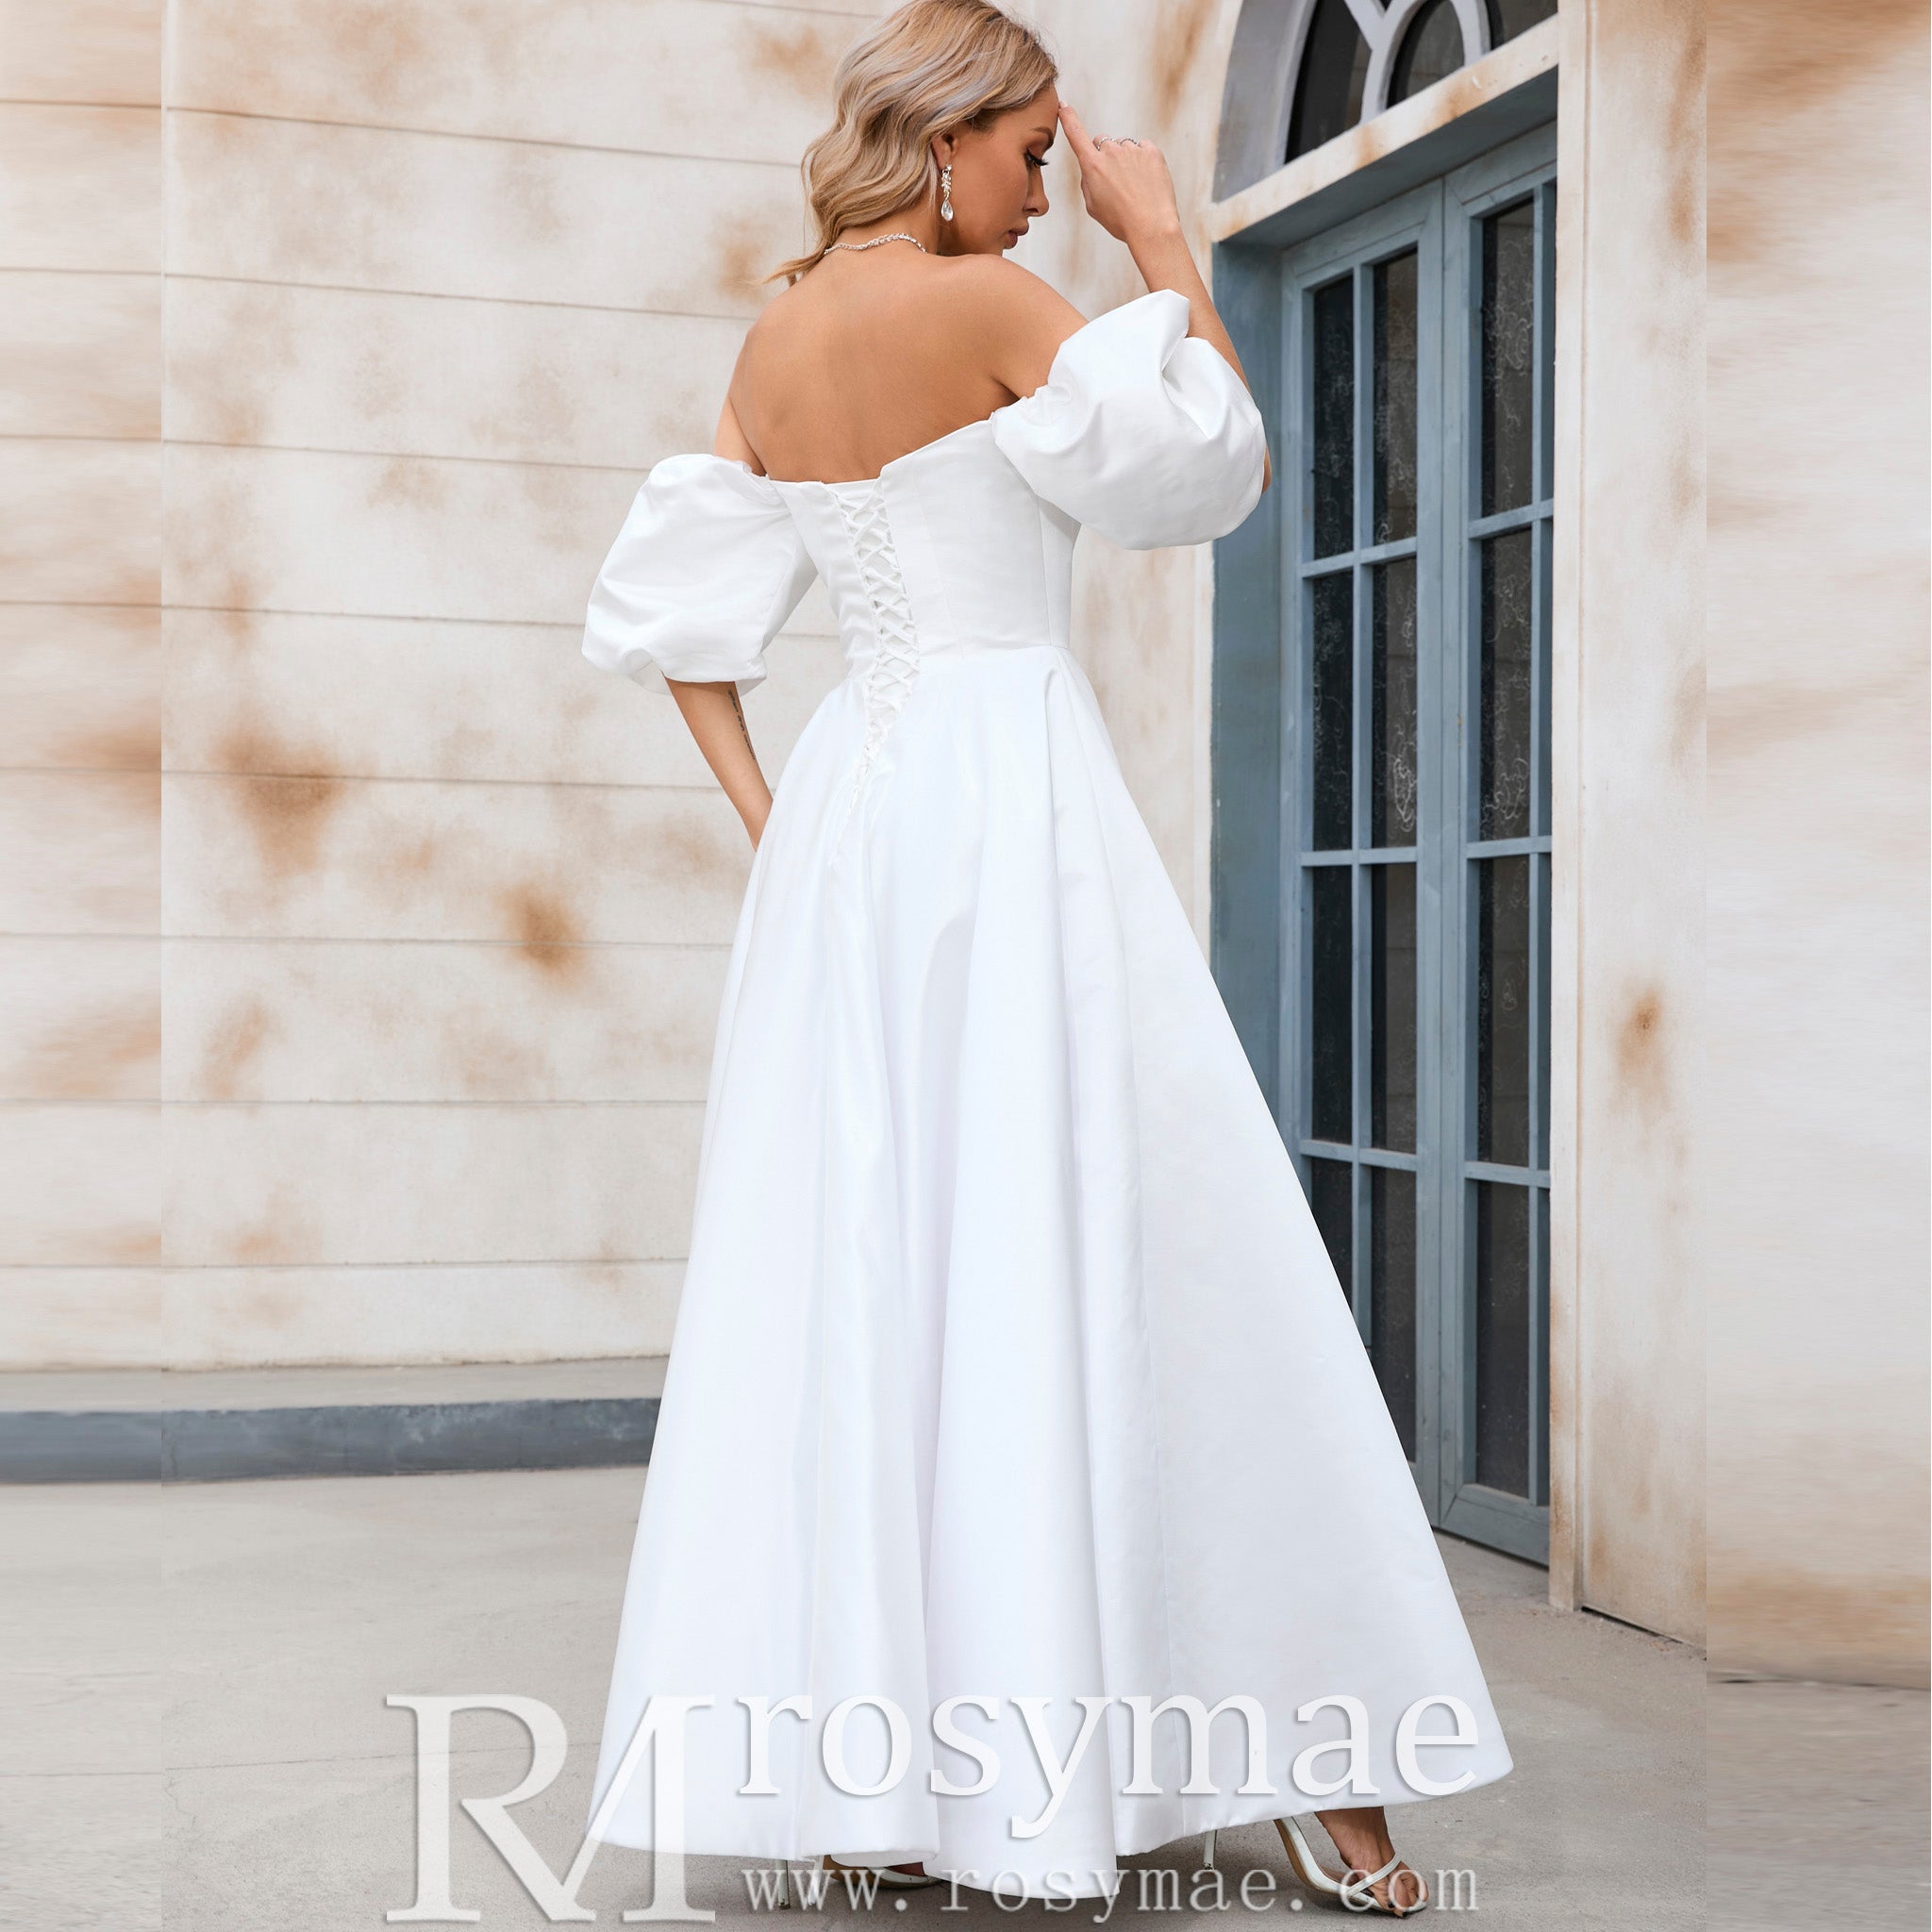 Tea Length A-line Wedding Dress with Off the Shoulder Sleeve